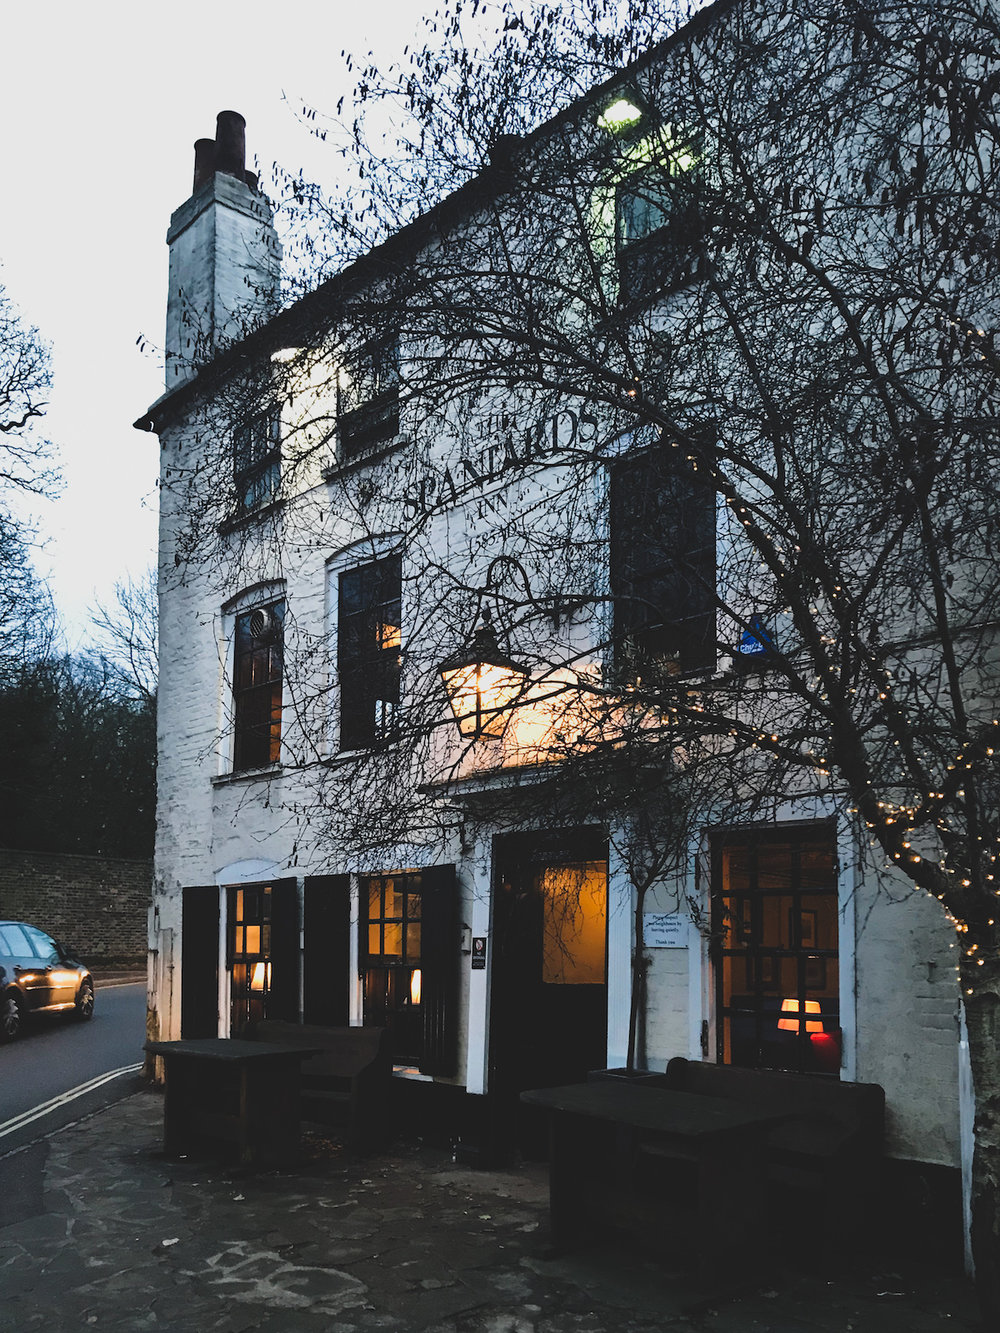 a wintery spaniards inn, north london